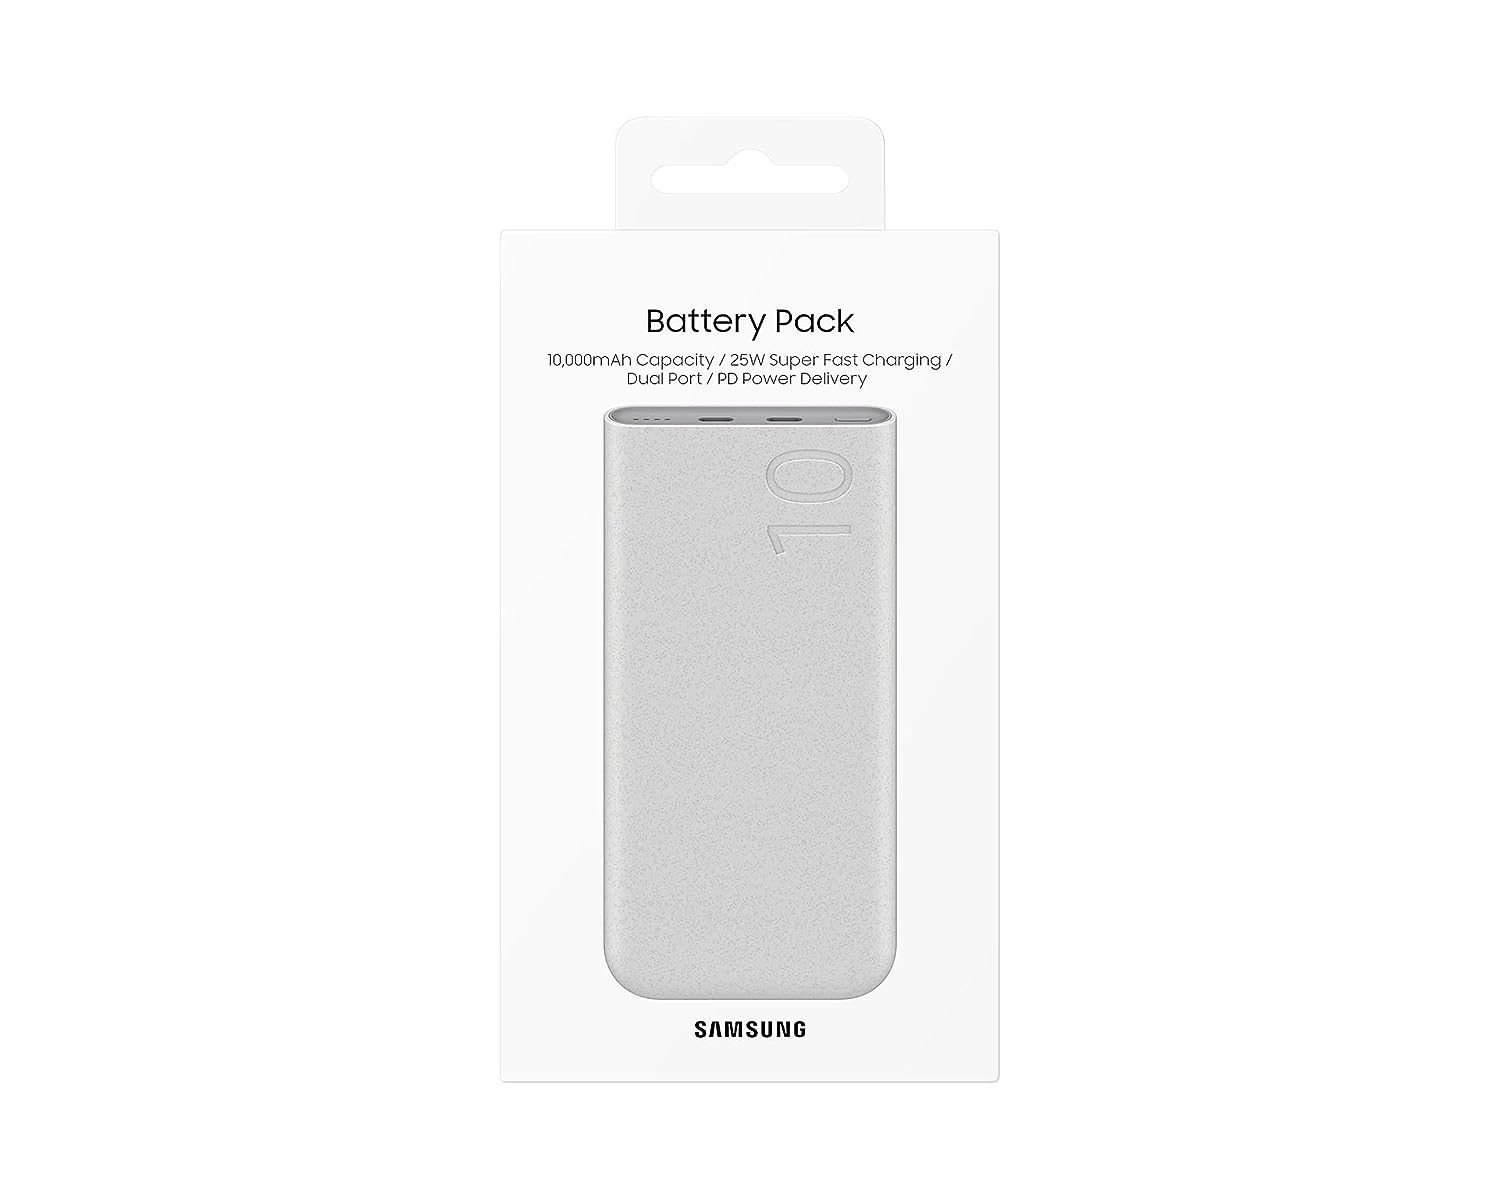 Samsung Galaxy 10000mAh Power Bank, 25W Fast Charging, Dual Output